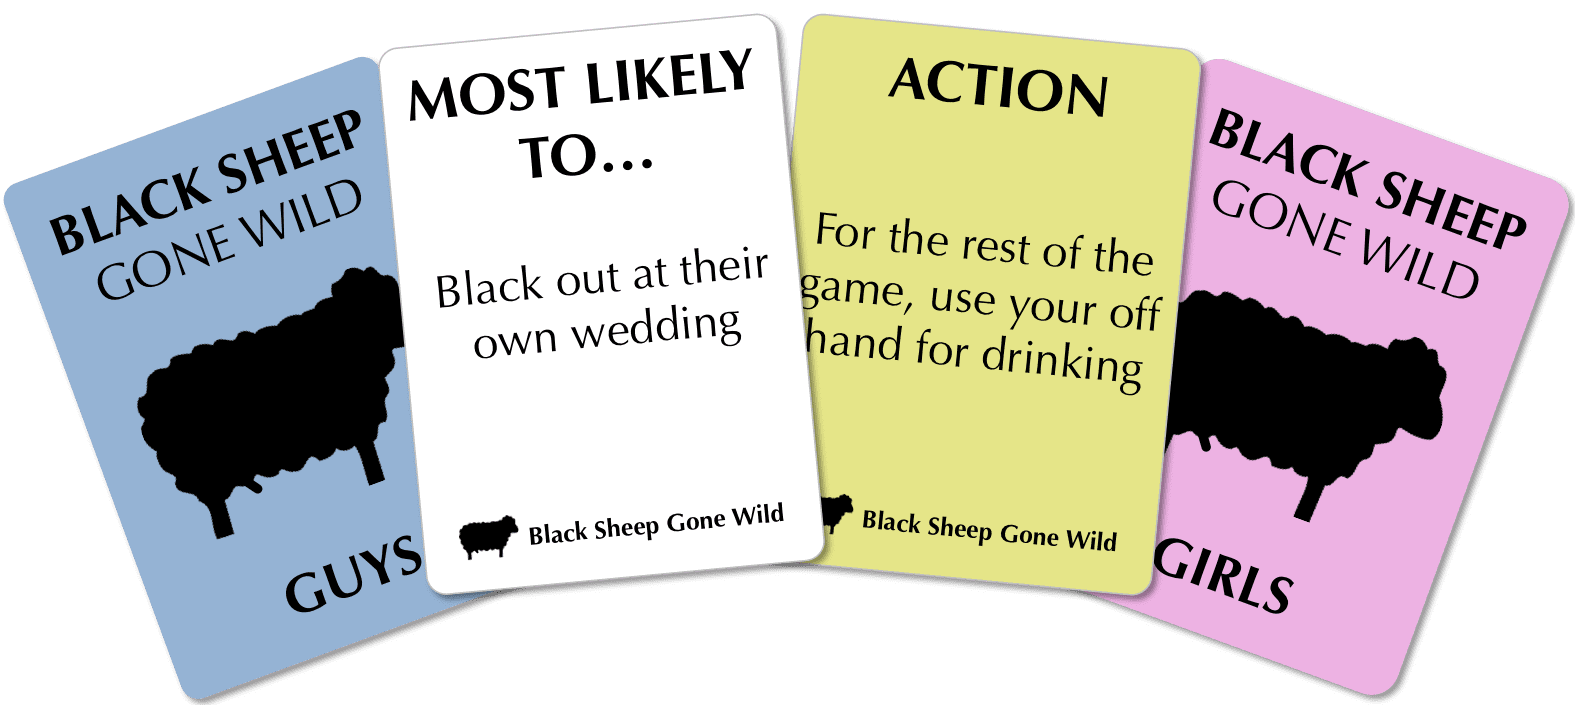 Black Sheep Gone Wild